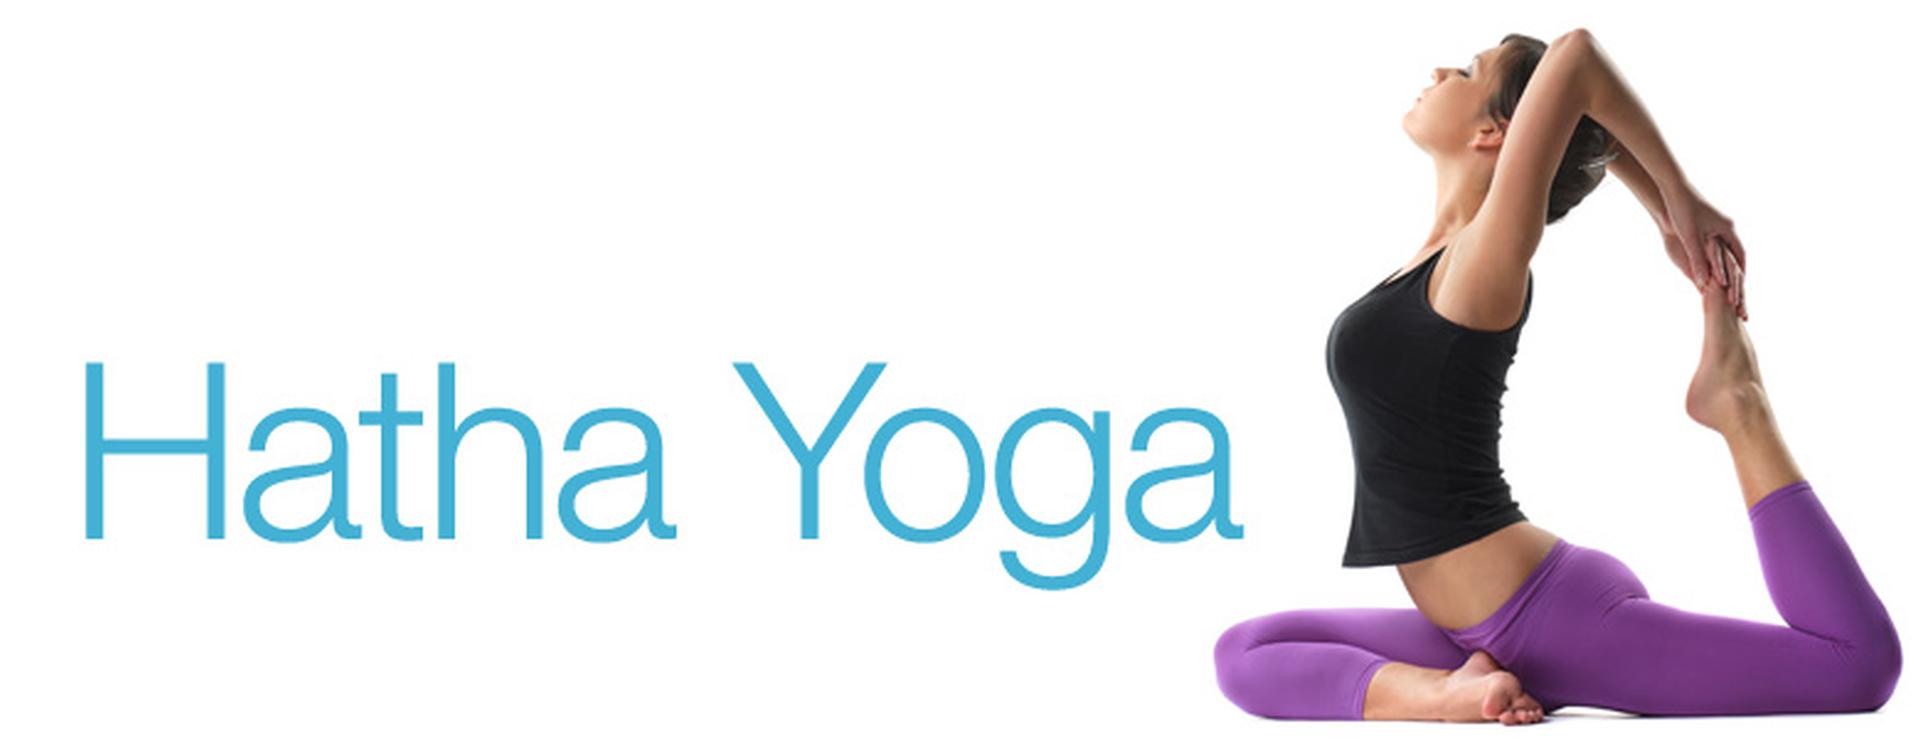 How is Hatha Yoga different from Bikram Yoga? 5